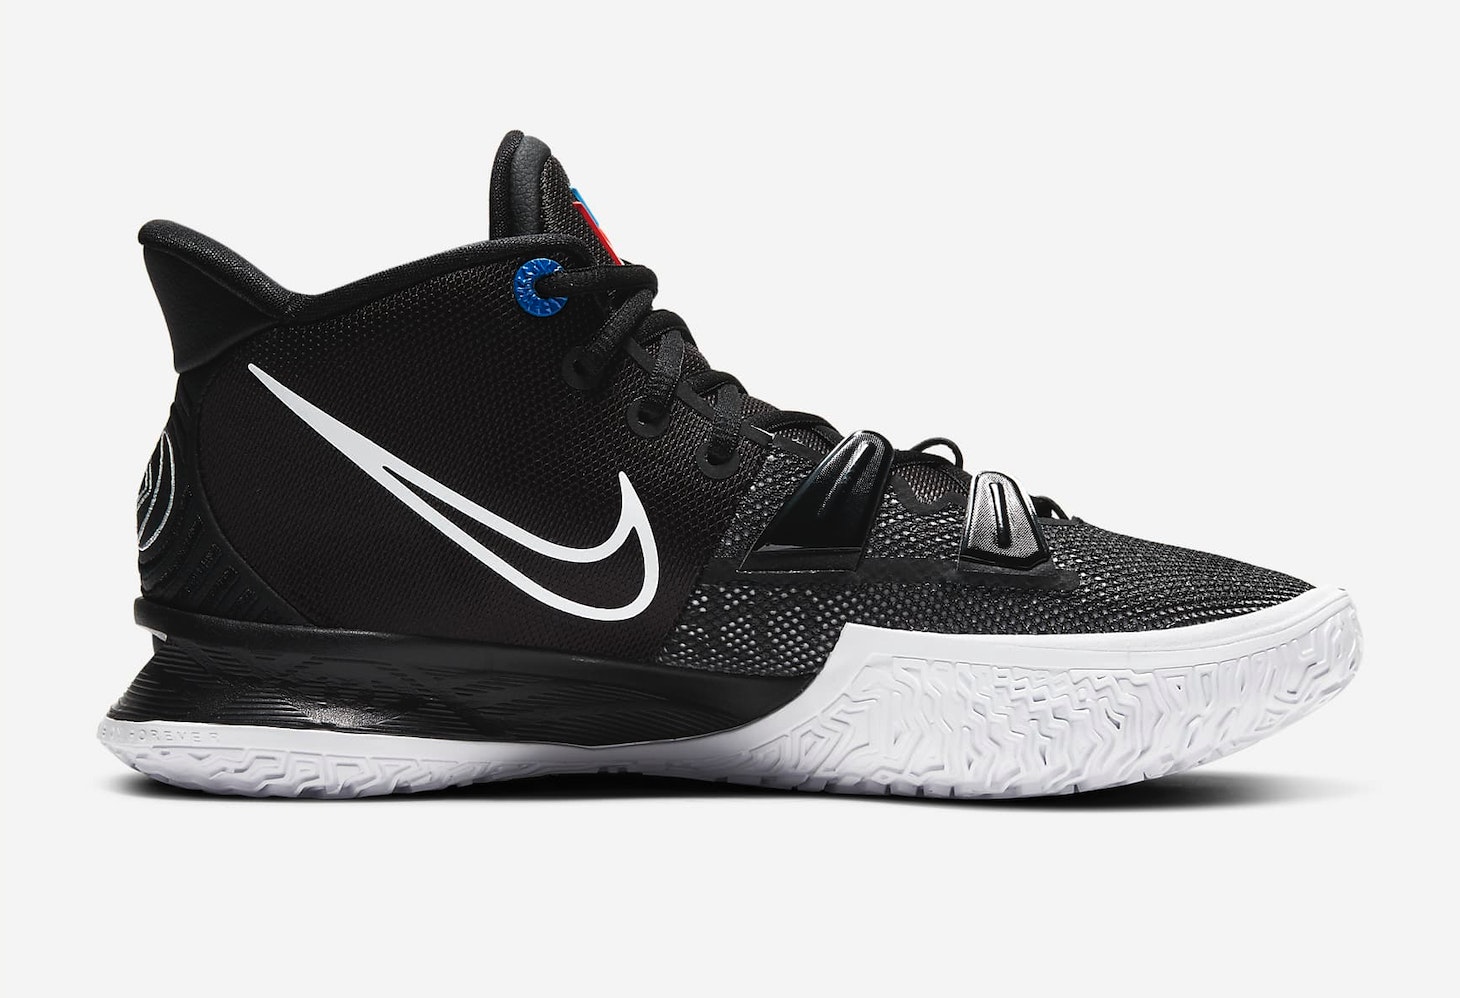 Nike Kyrie 7 “BK Black”